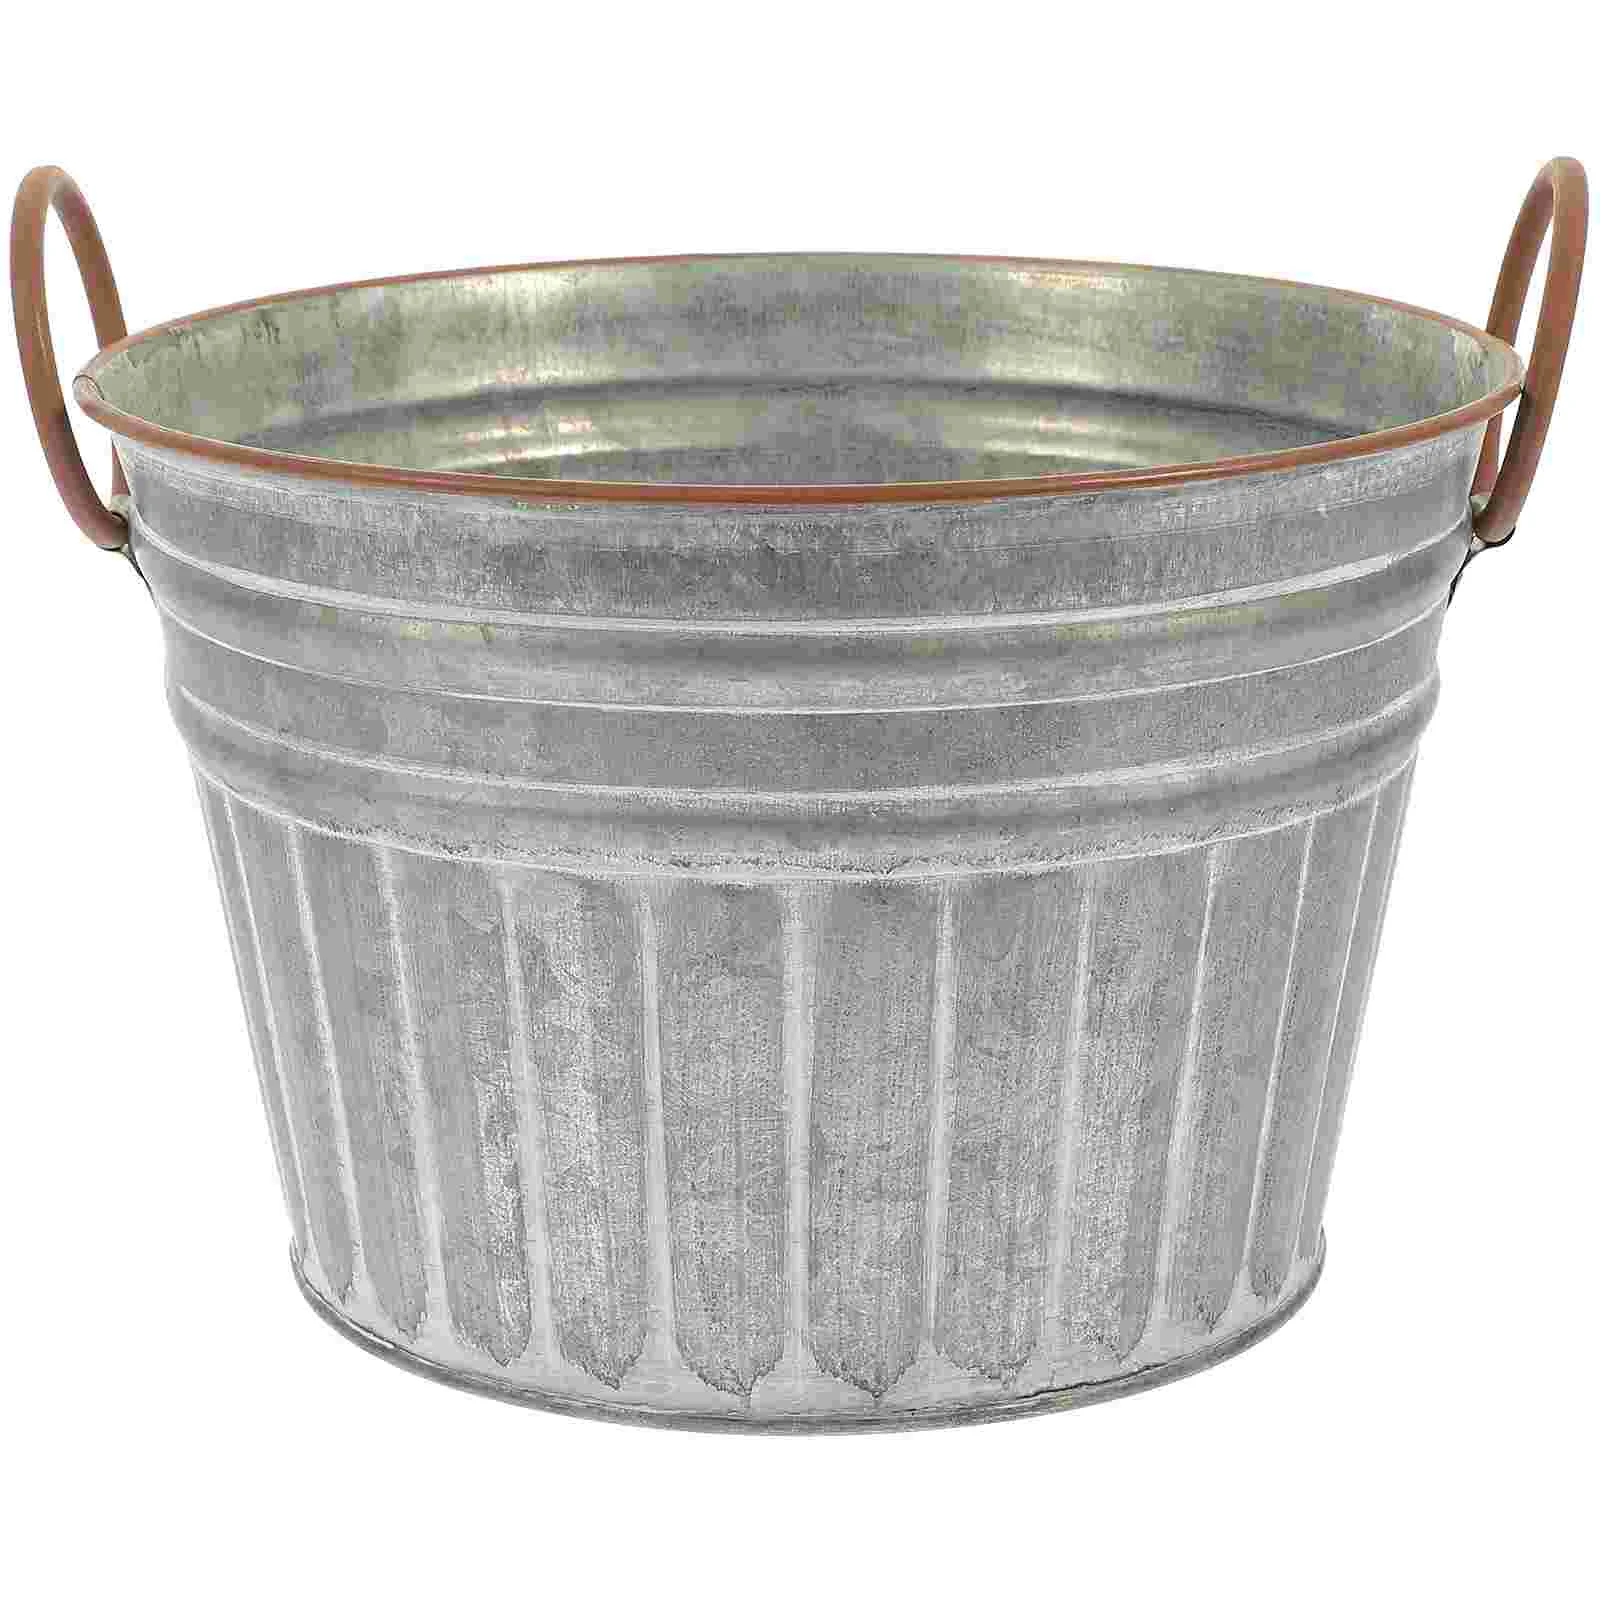 

Vintage Decor Tin Bucket Vase Dried Flower Pots Indoor Outdoor Old Wrought Iron